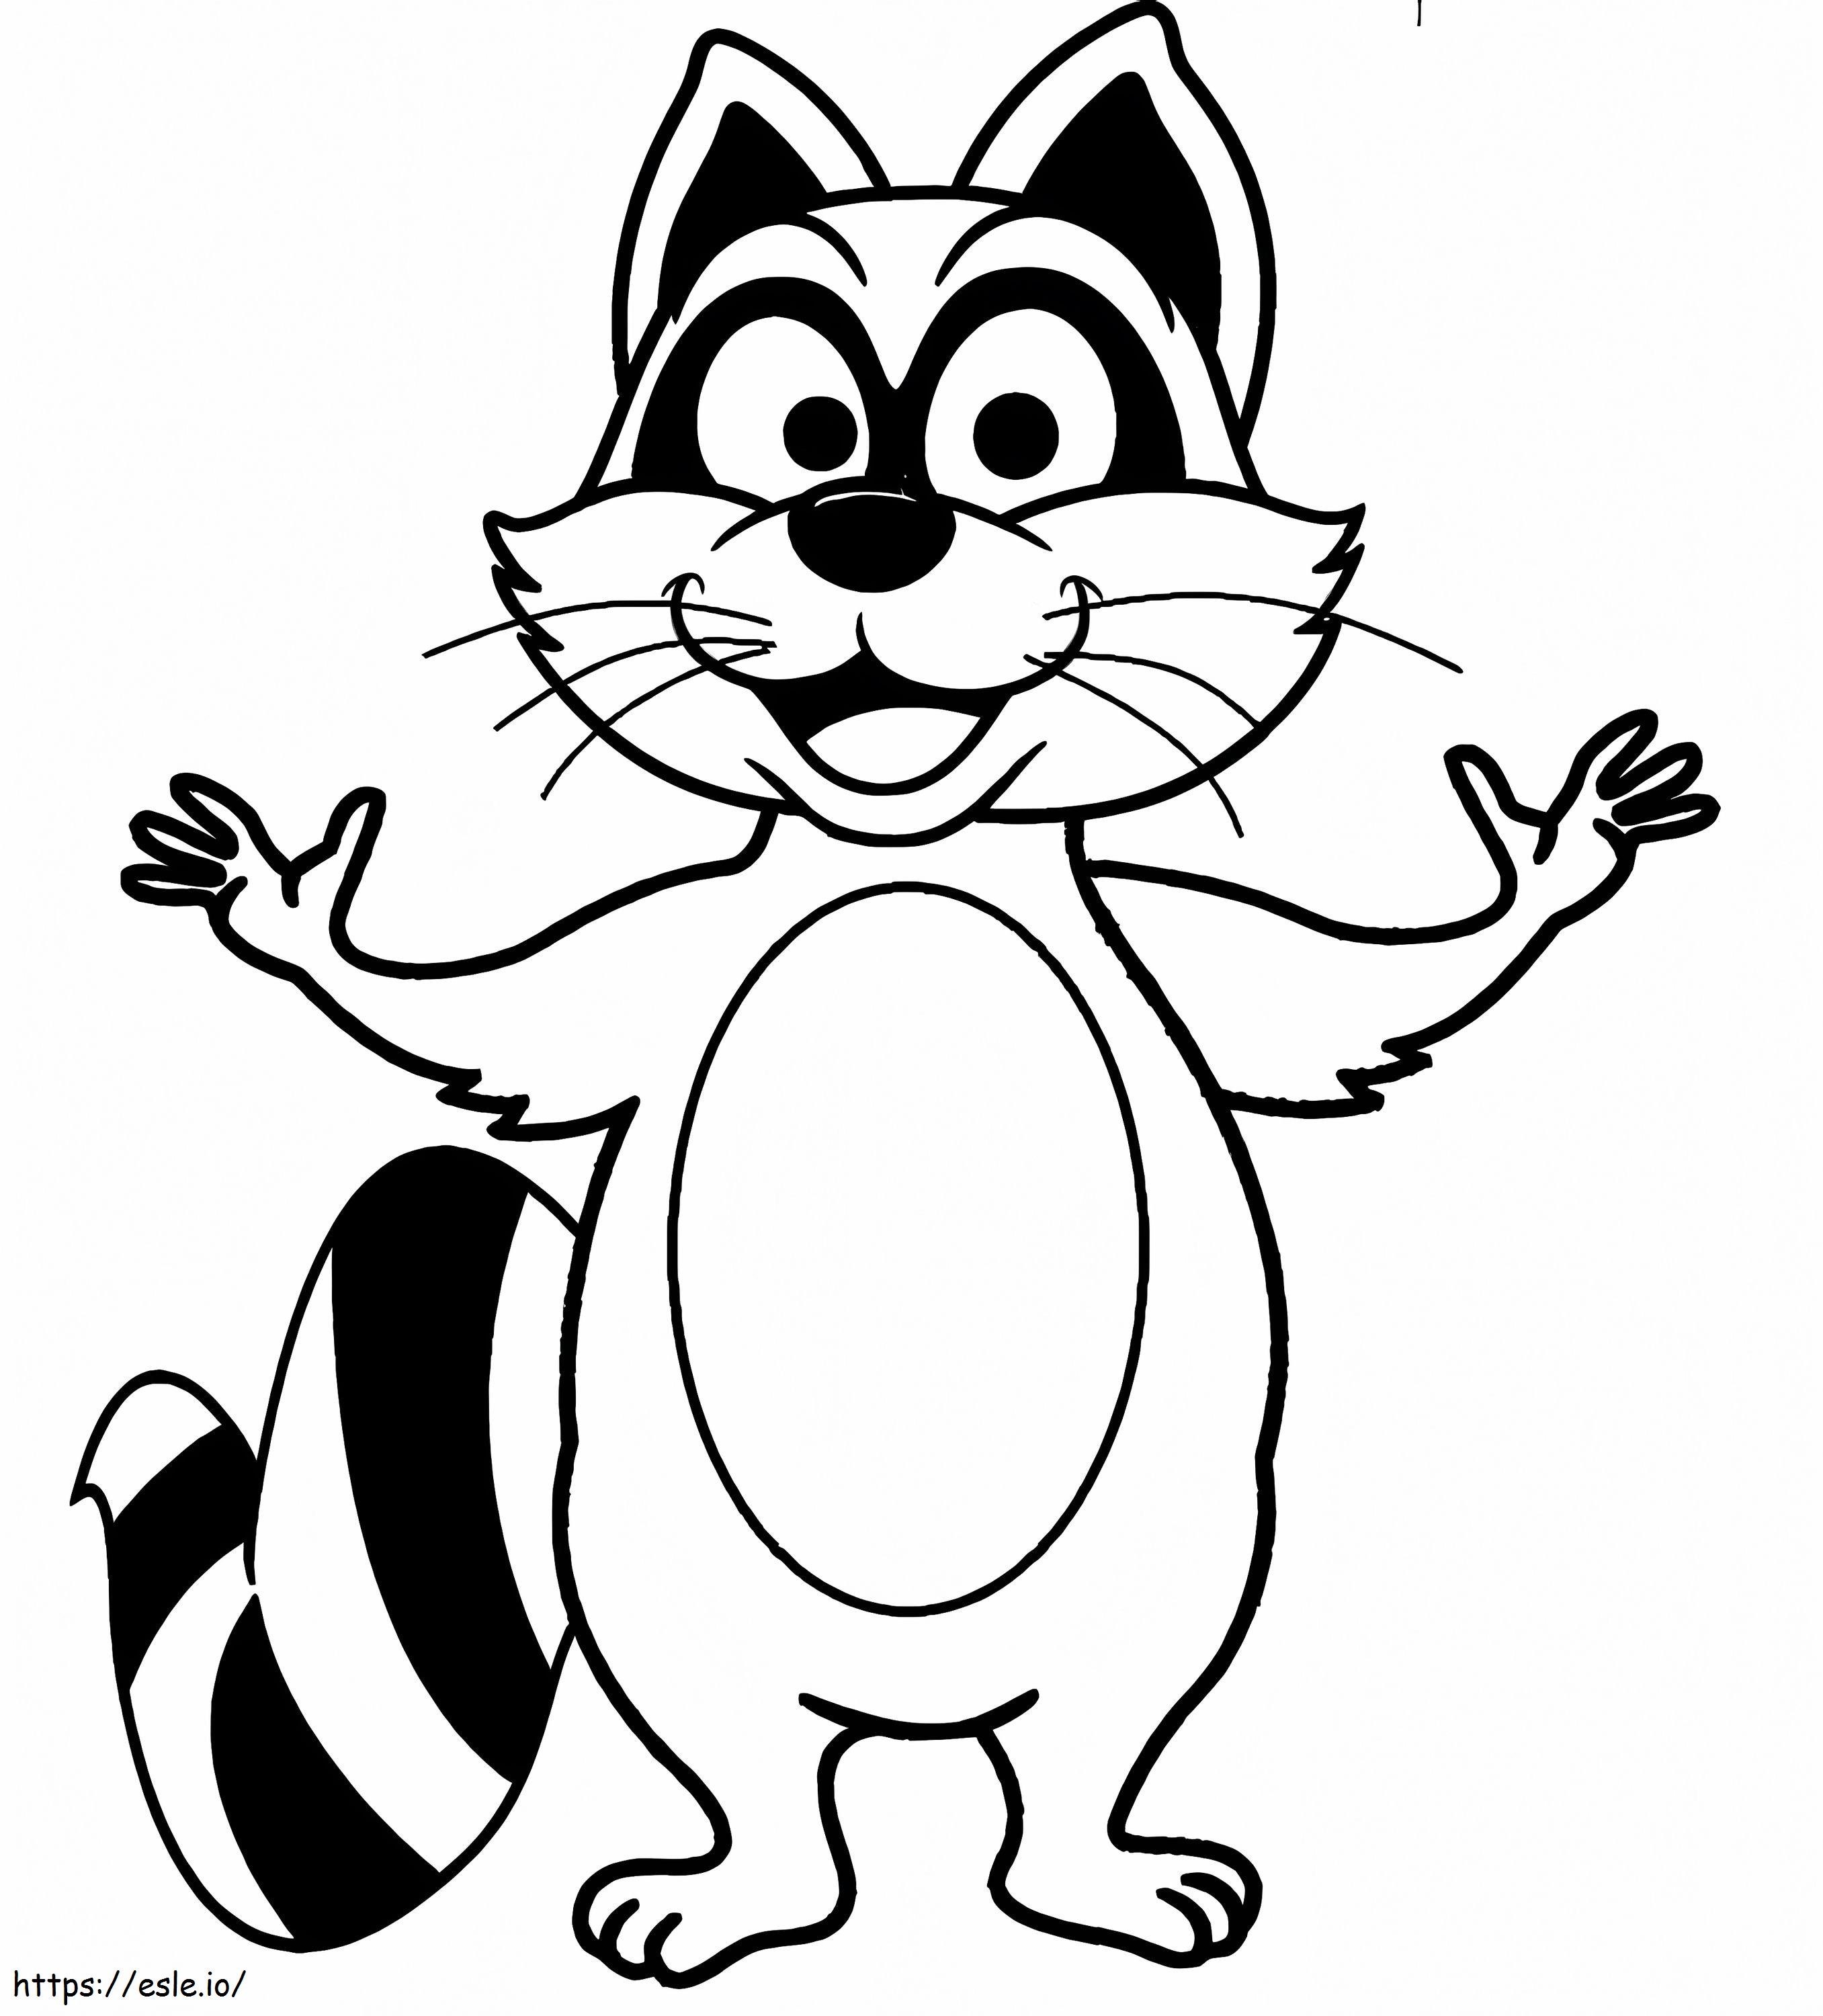 Happy Raccoon coloring page